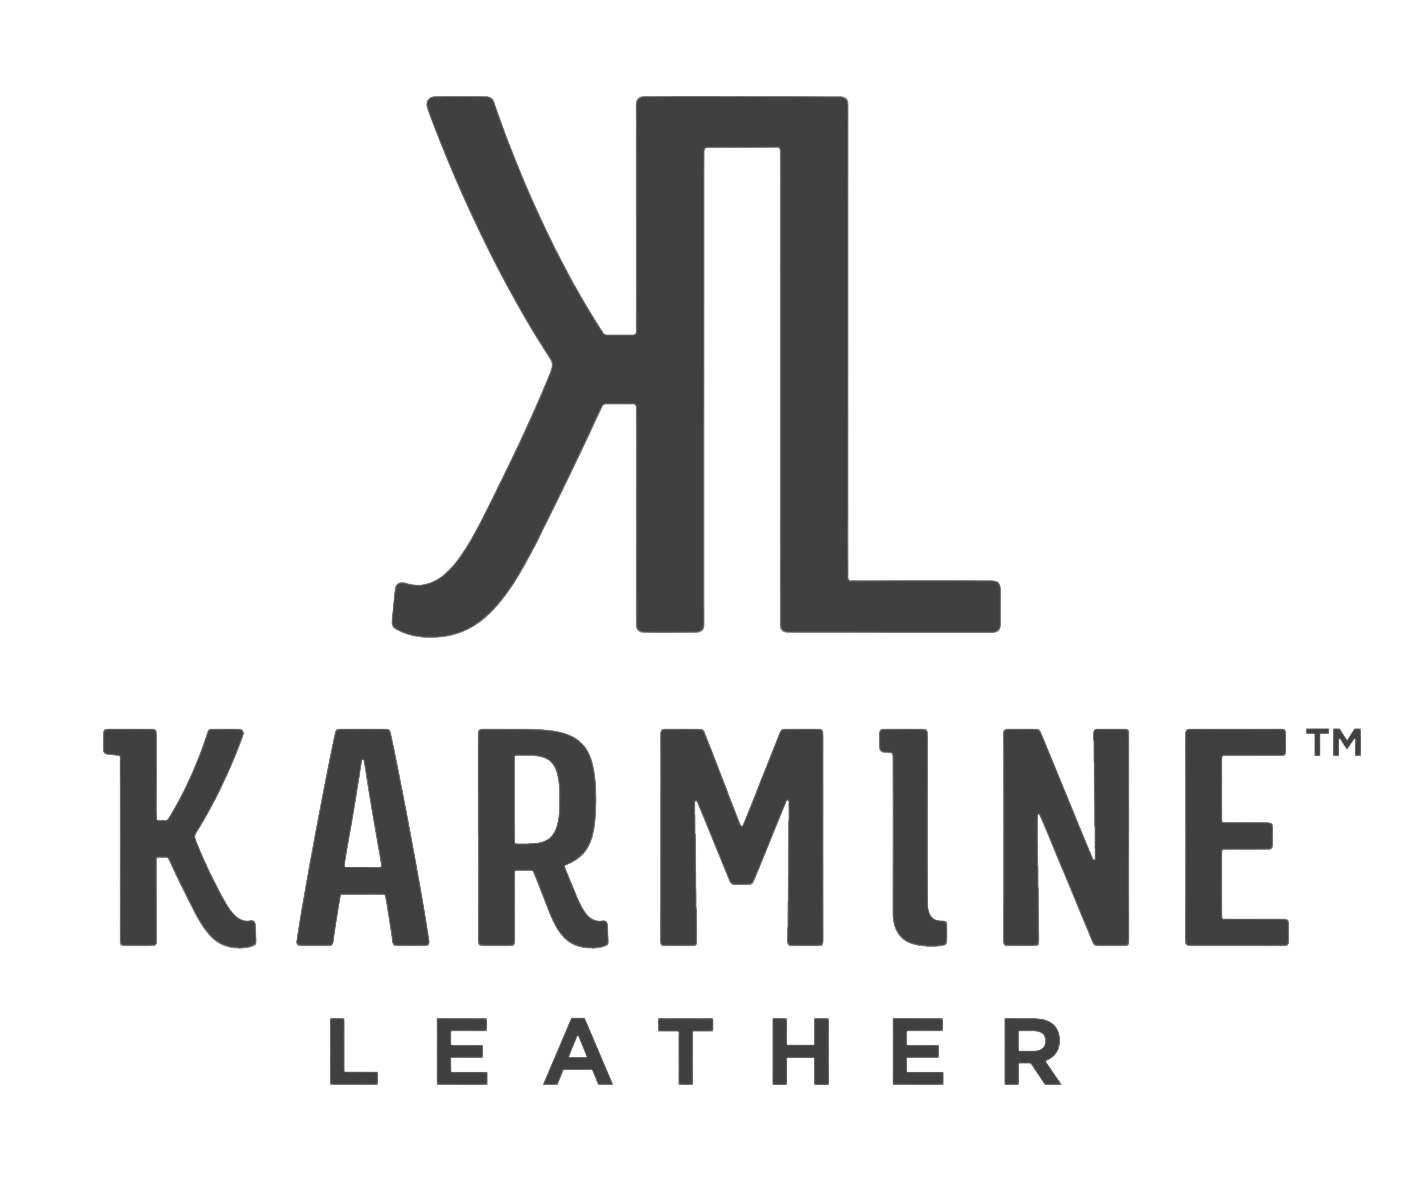 Karmine leather and leathercraft. Kangaroo leather goods and leathercraft supplies australia